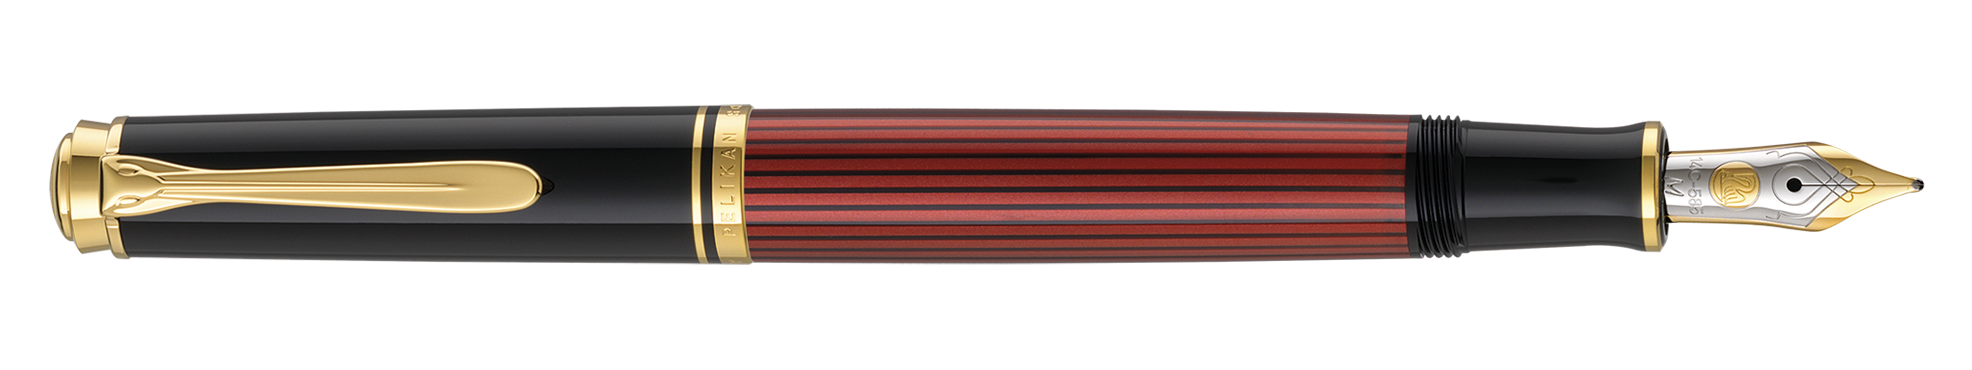 Souverän® 600 Black-Red